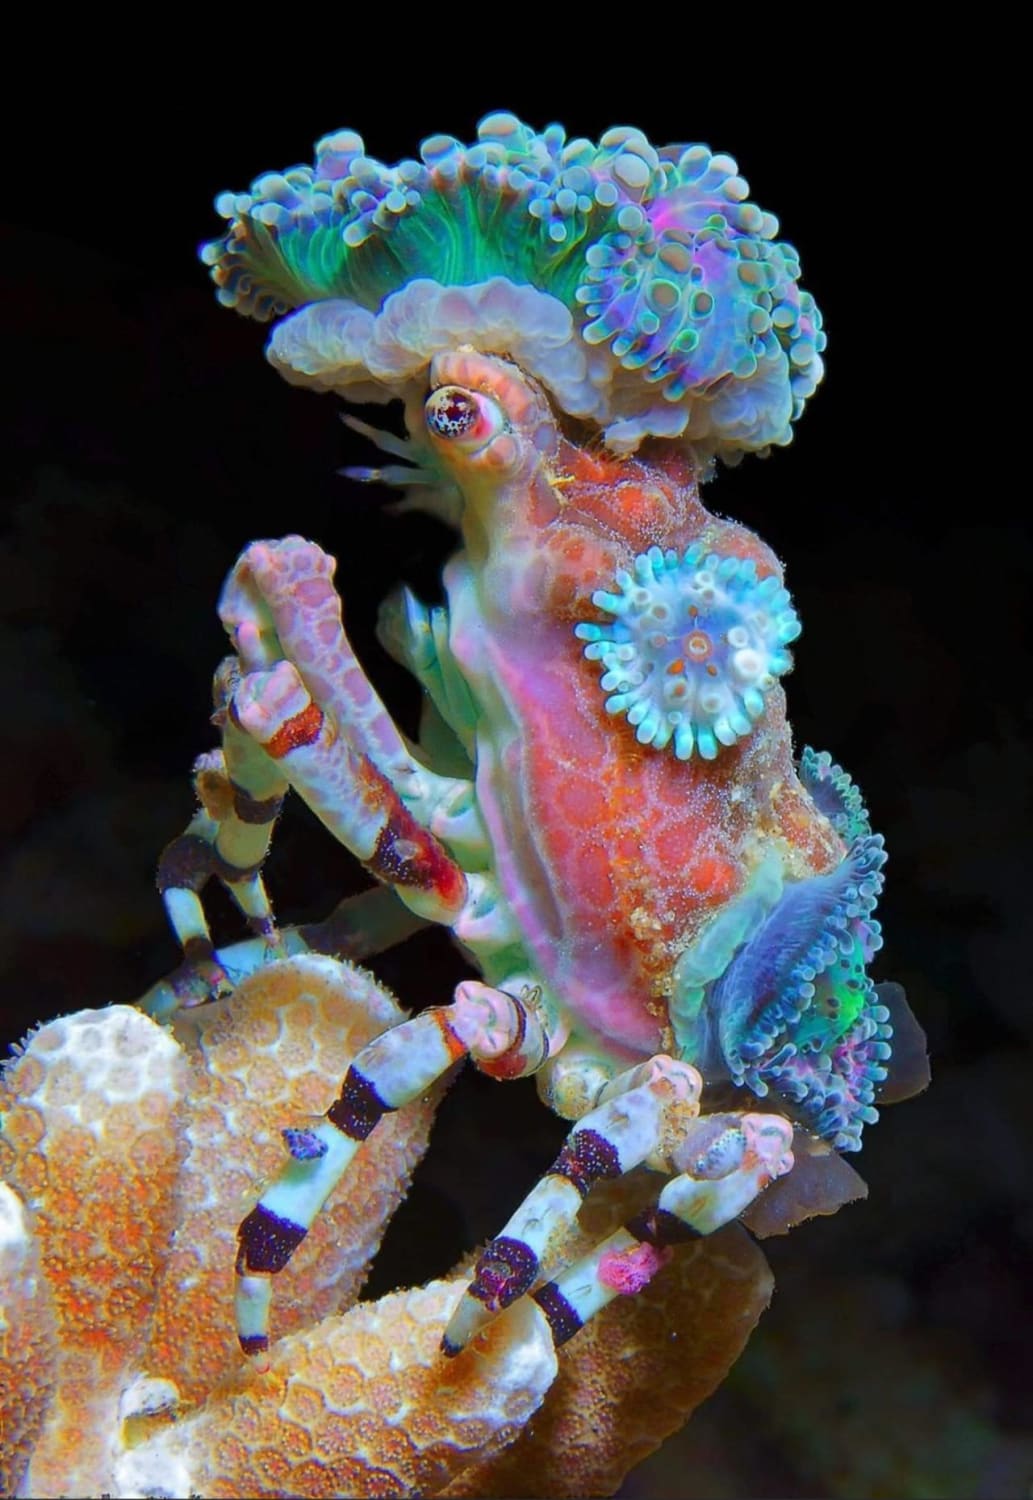 This decorator crab's camouflage